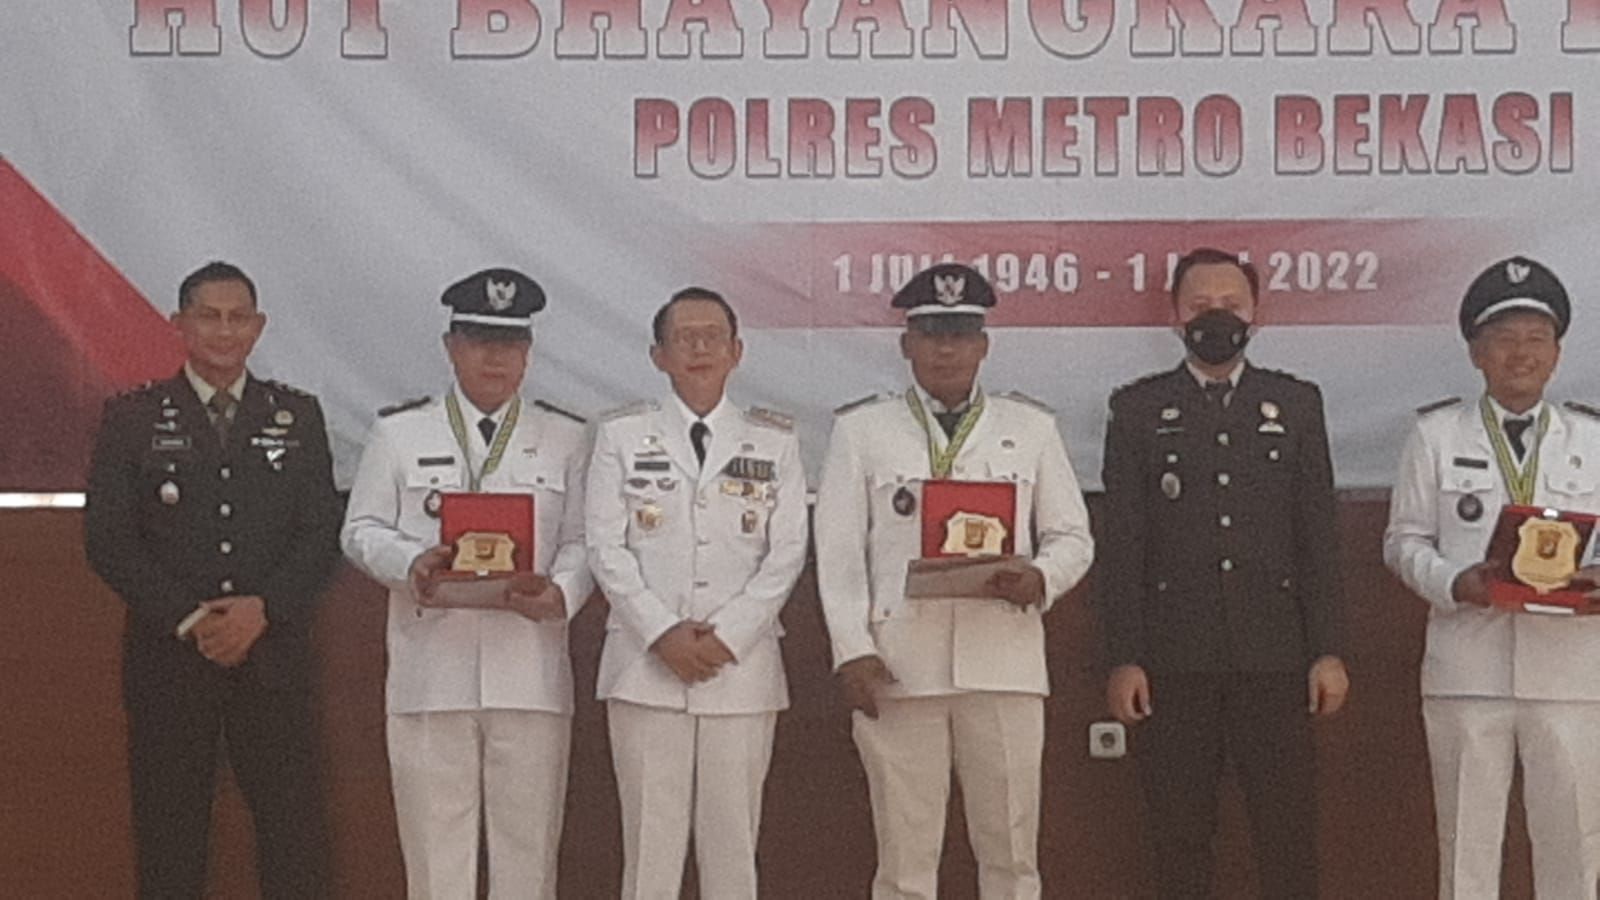 Kades Lubangbuaya Dapat Penghargaan dari Kapolres Metro Bekasi - Desapedia